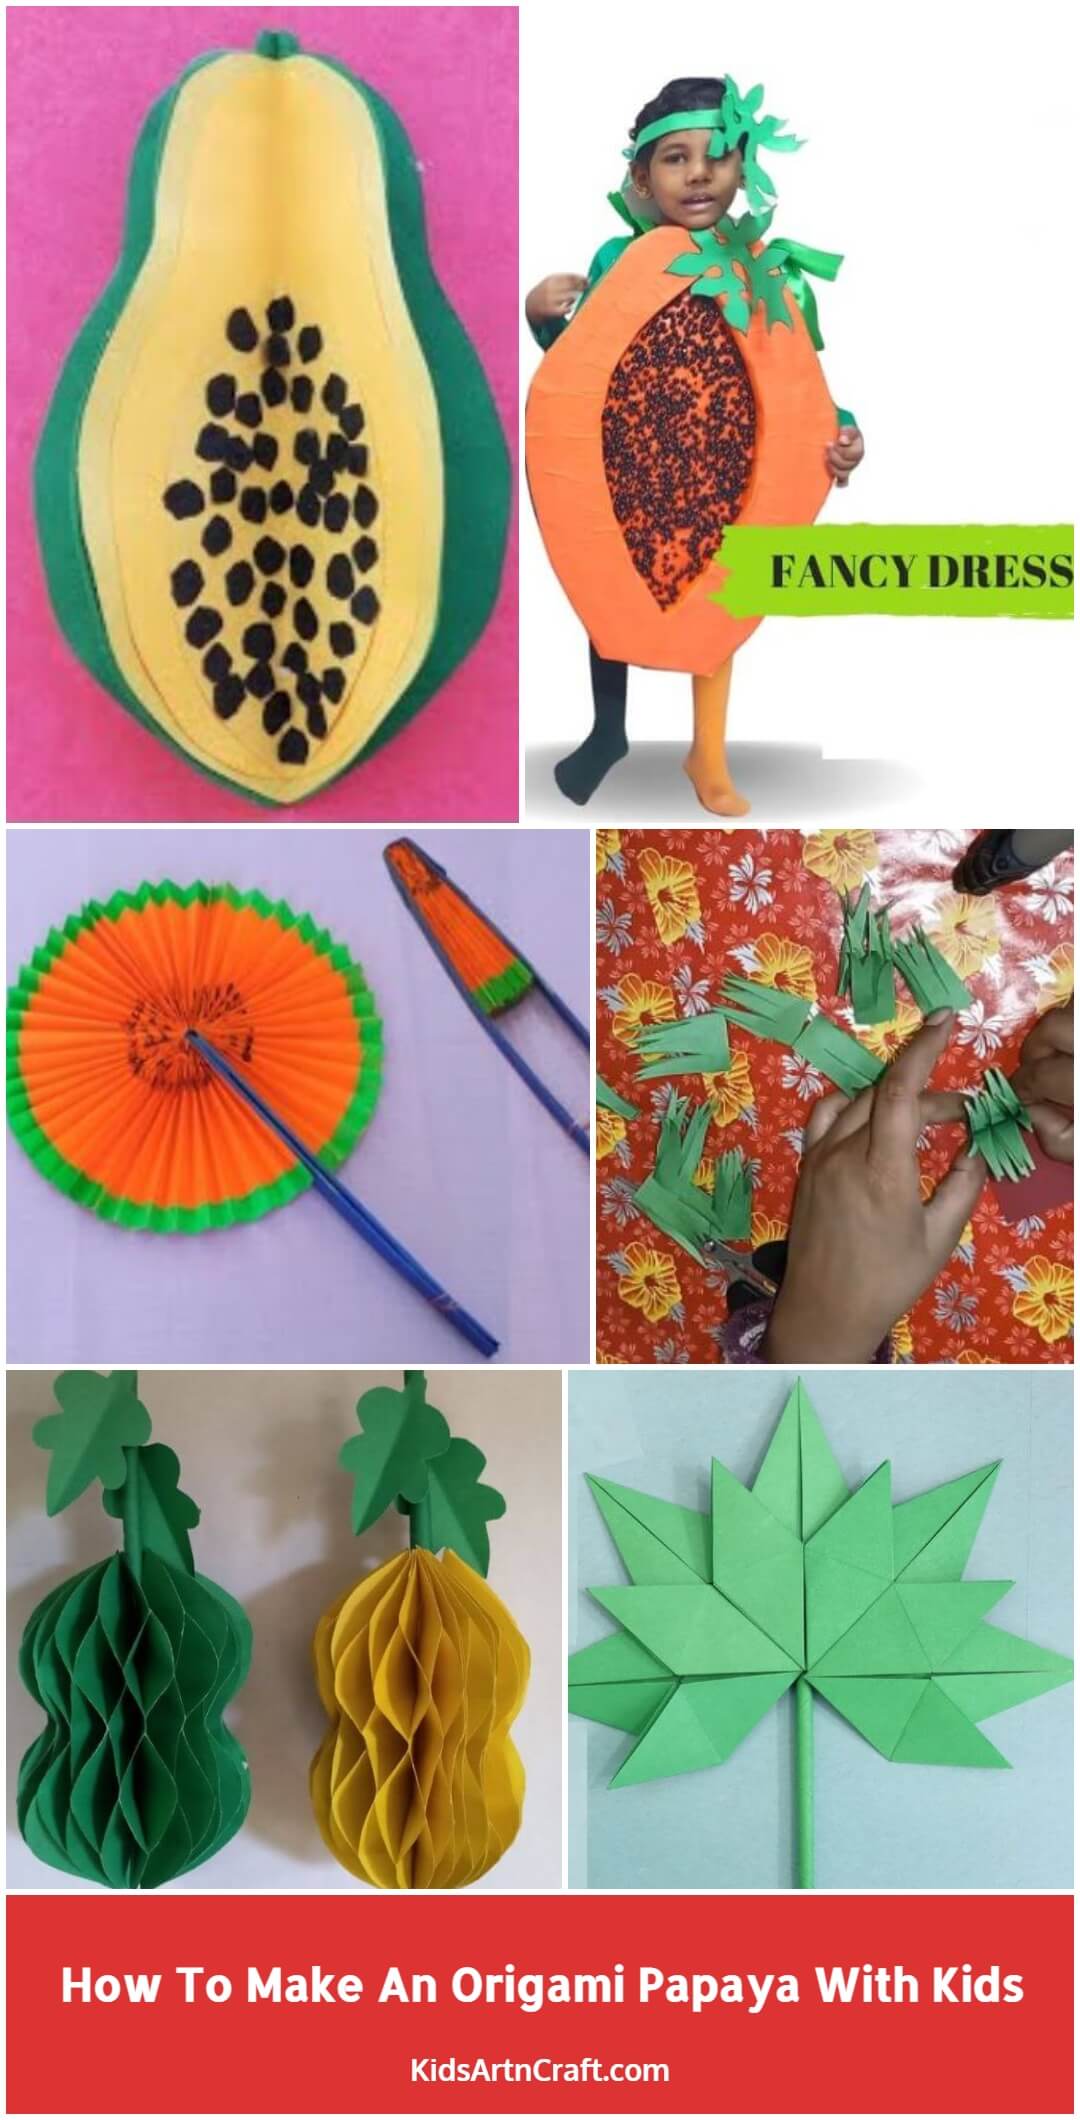 How To Make An Origami Papaya With Kids